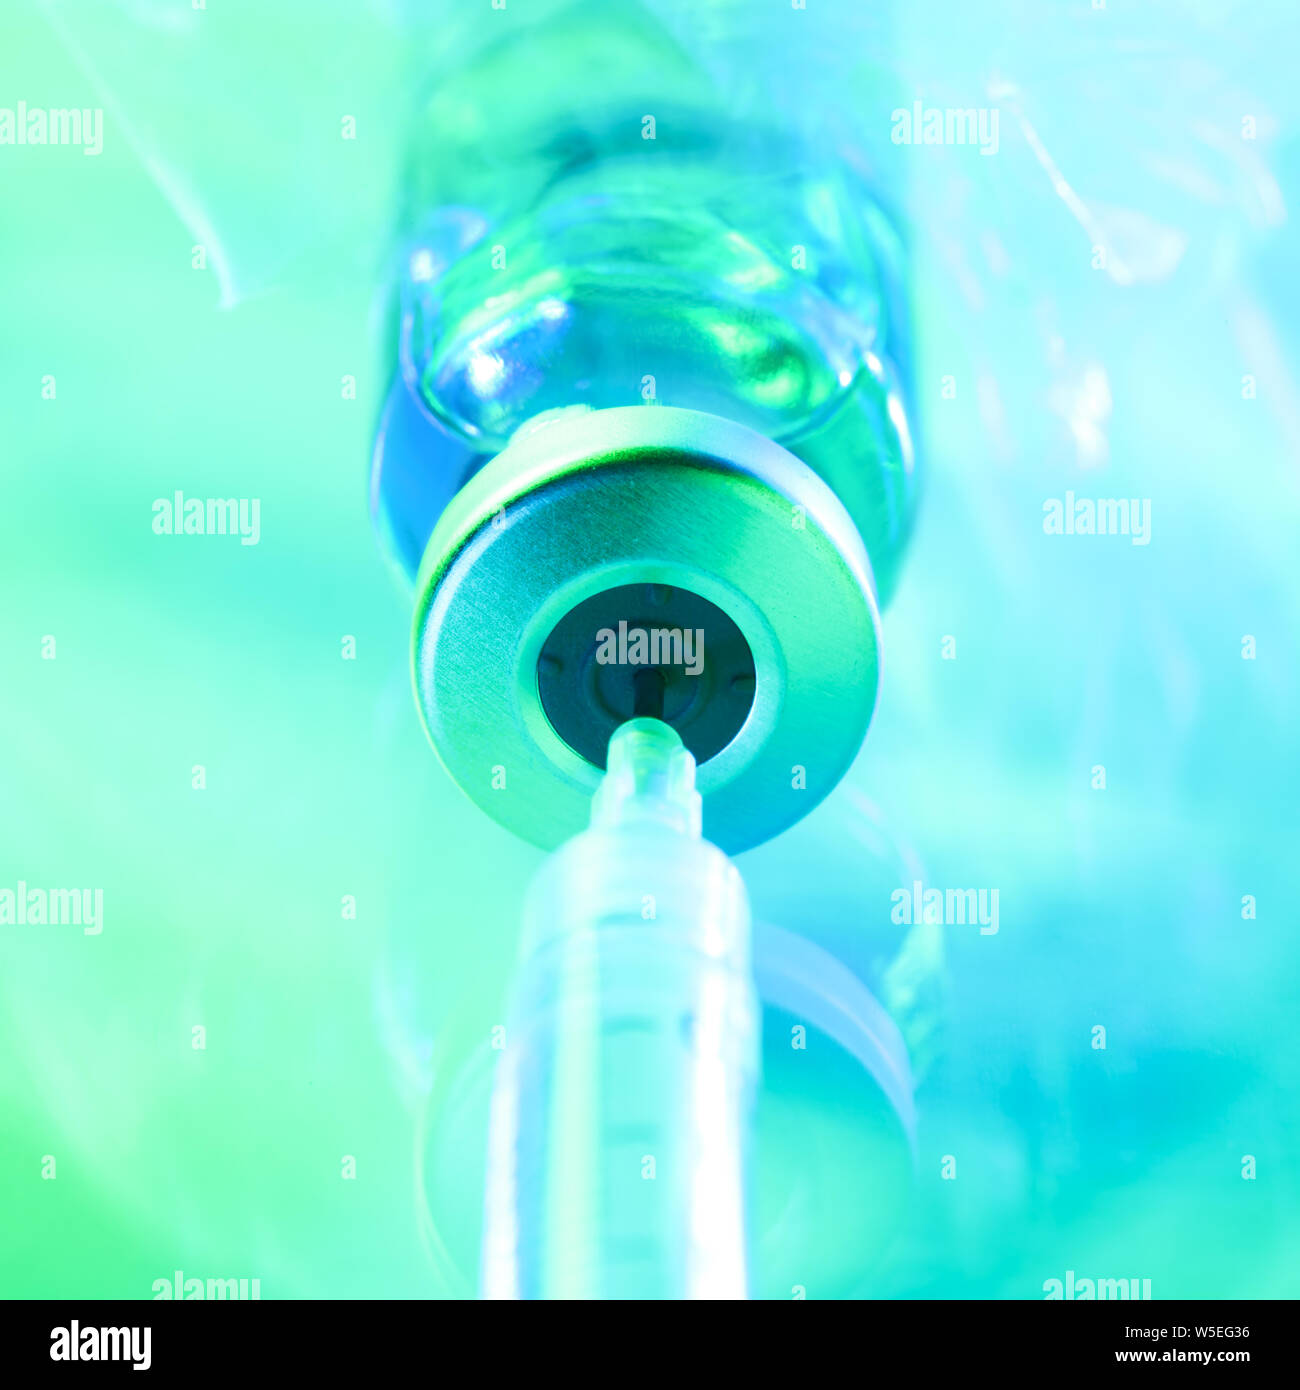 Drug vial with syringe background Stock Photo